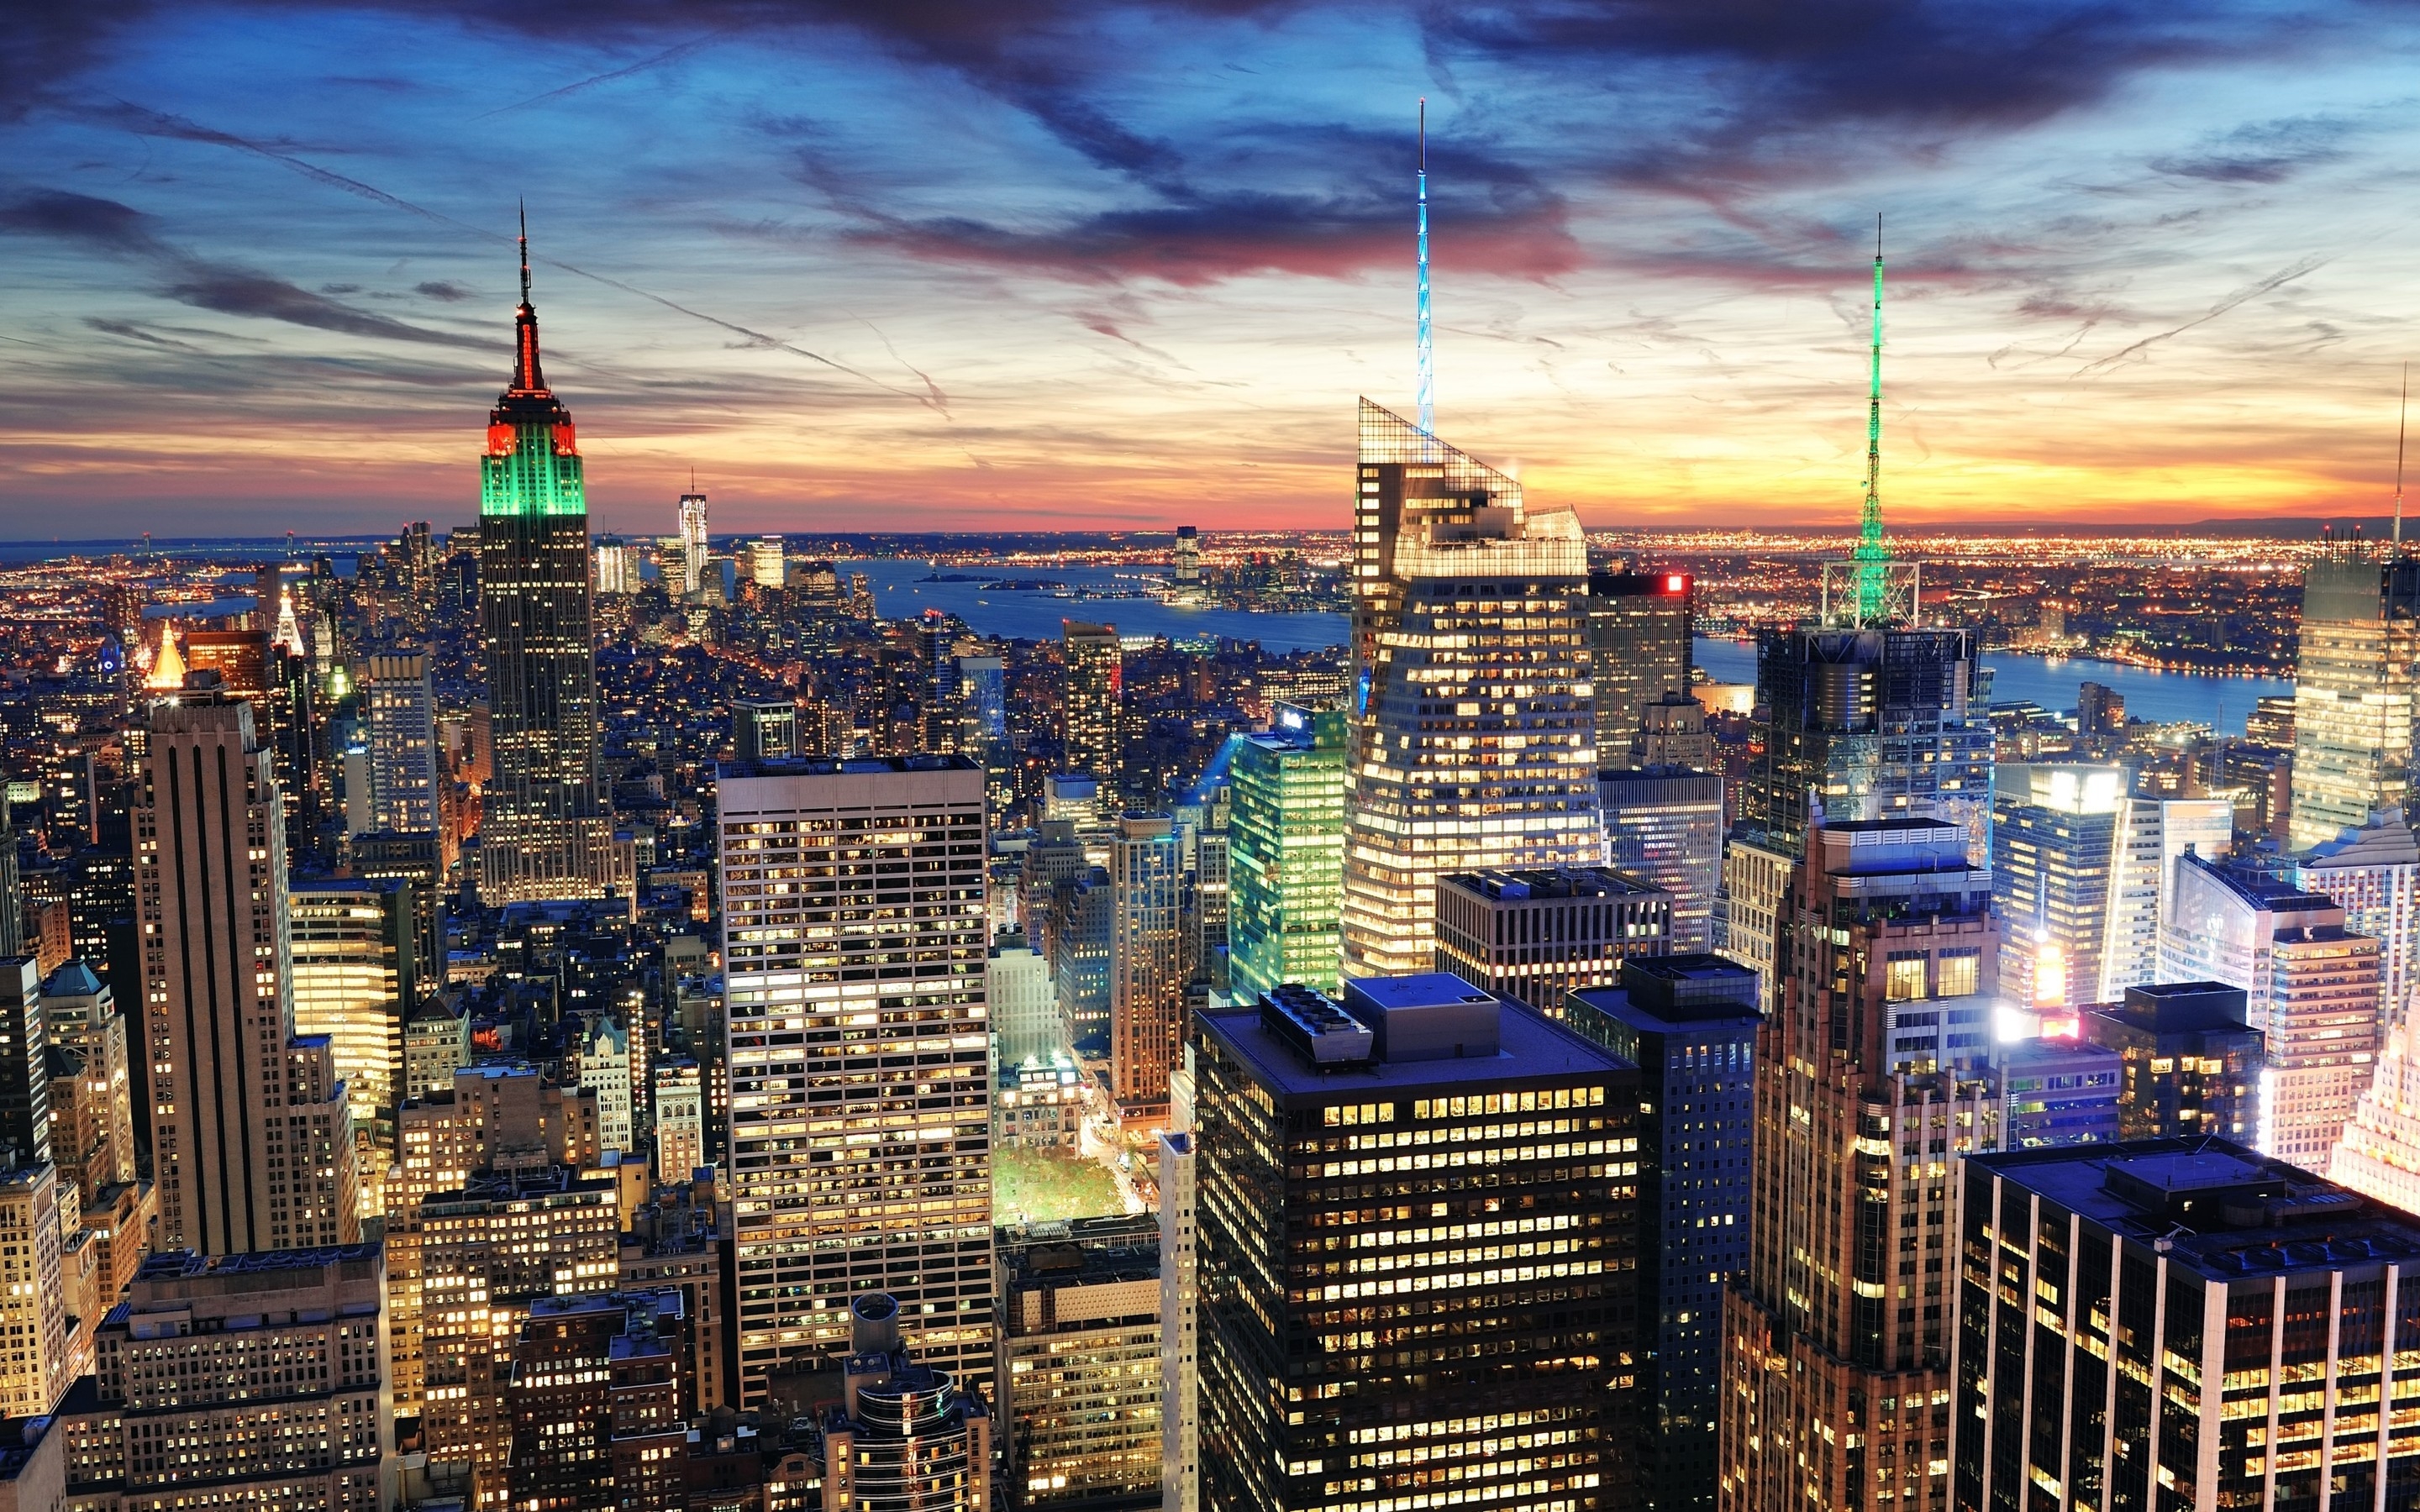 New York Night View for 2880 x 1800 Retina Display resolution